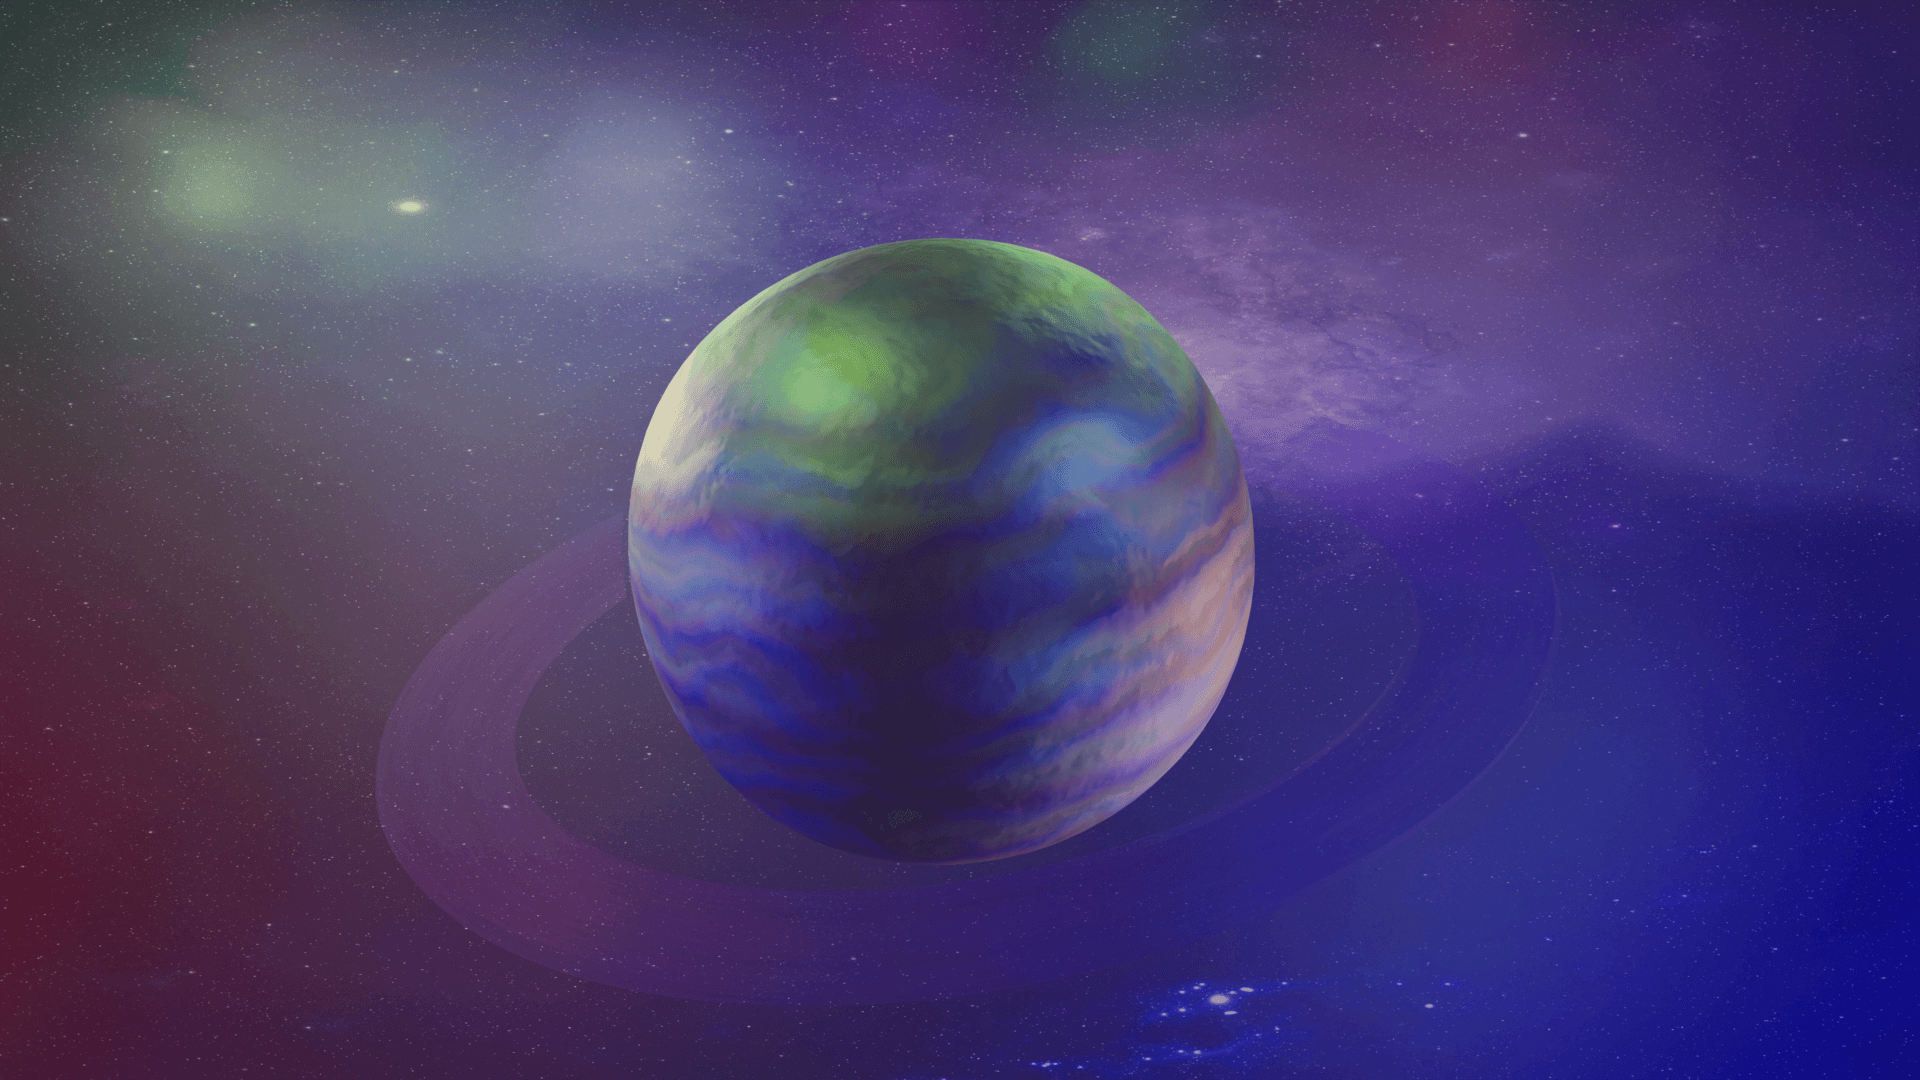 CSC Planet "OGLE-2018-BLG-1700L b" #180